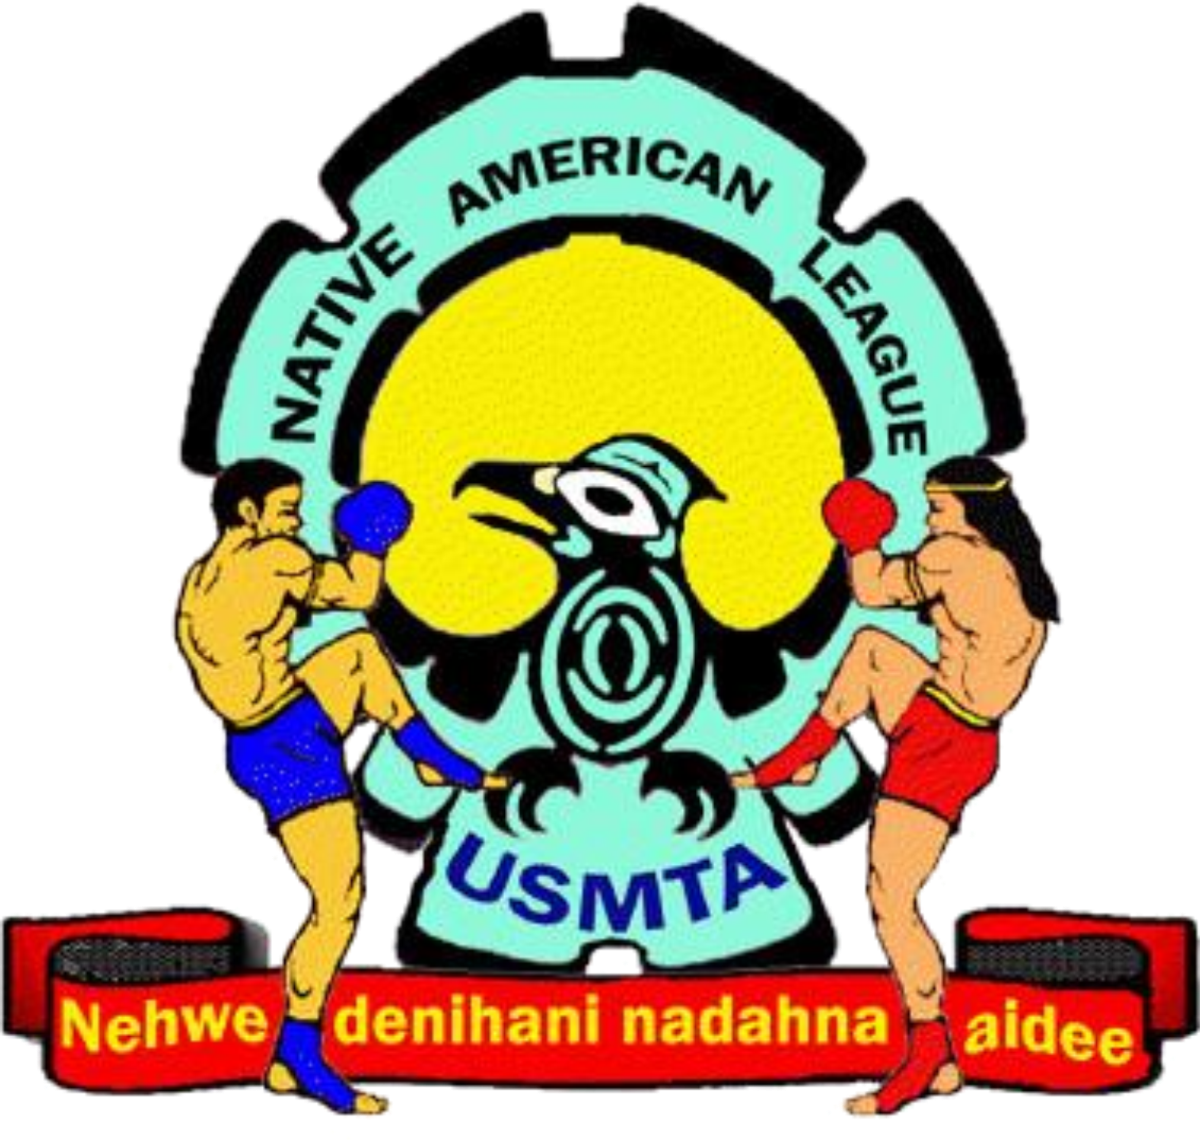 Kickboxing Match U S M T A Logo